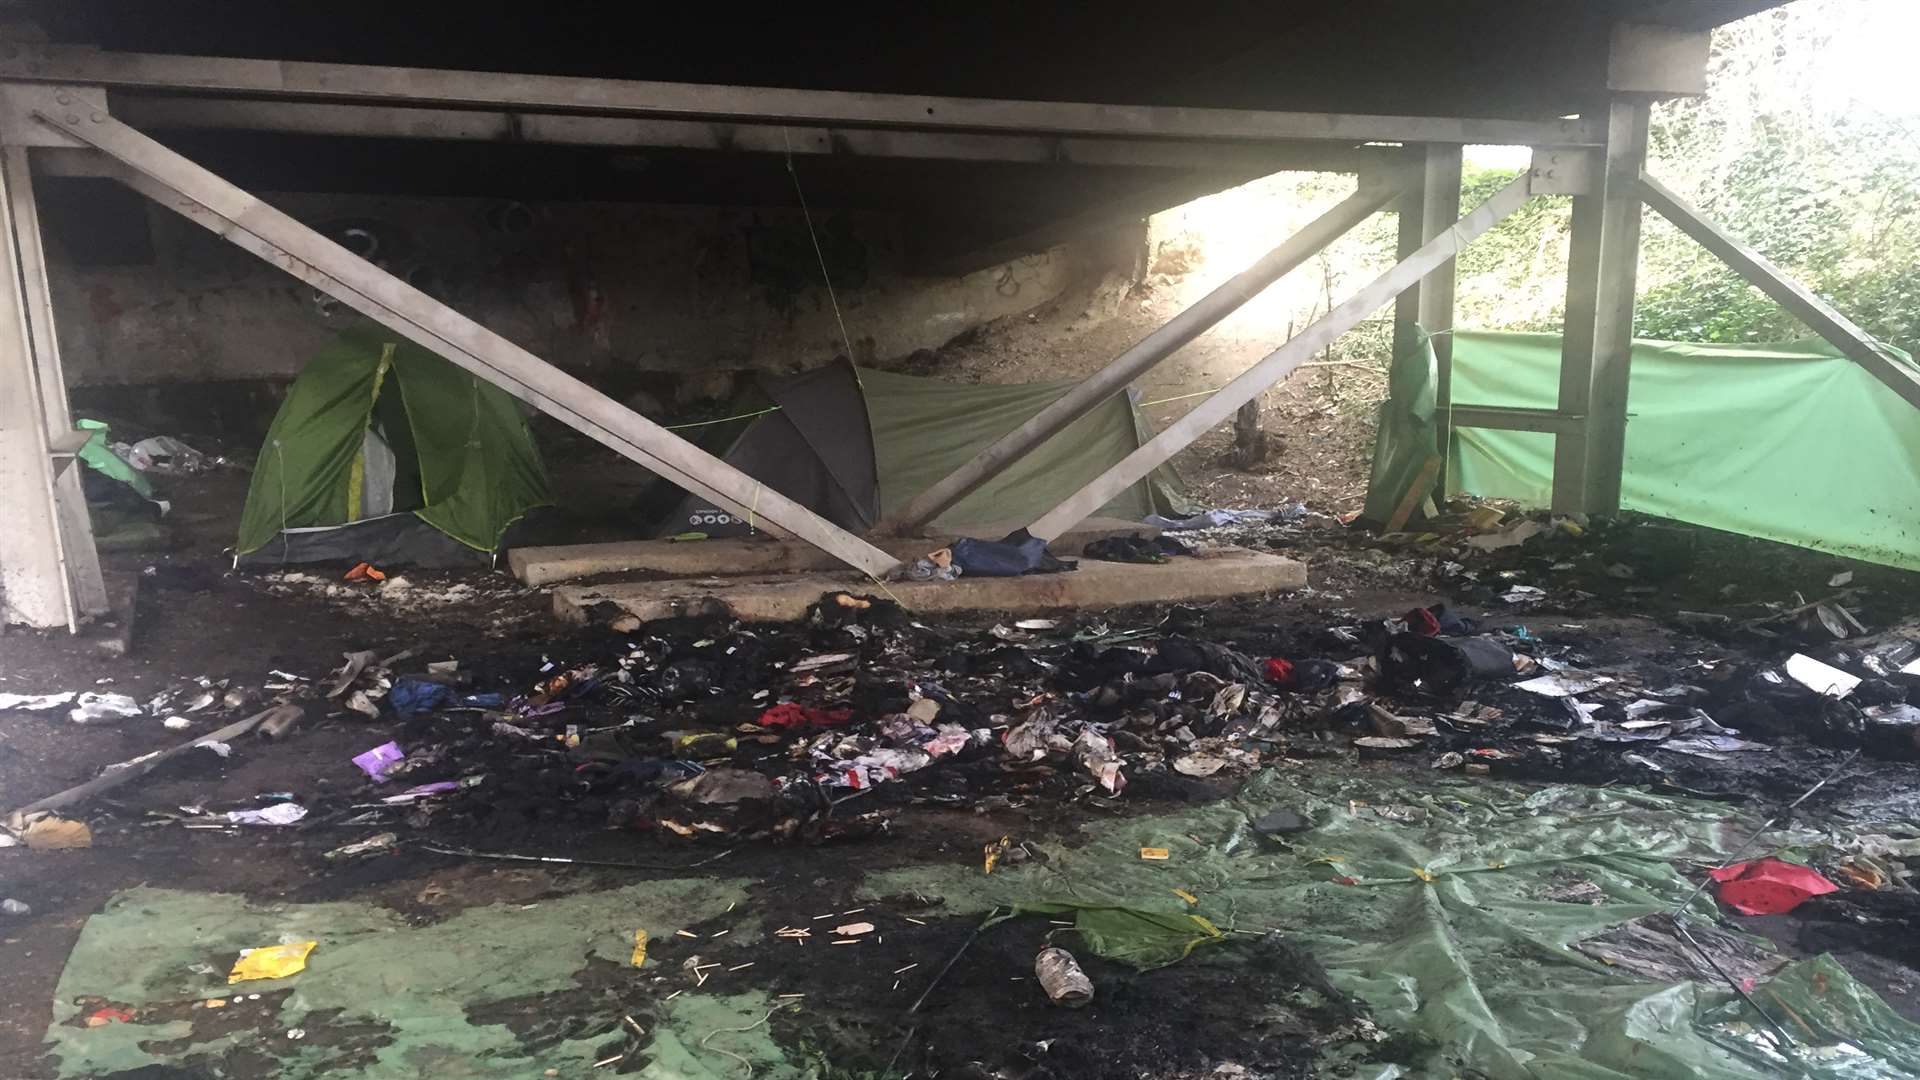 Fire ripped through a homeless encampment last night